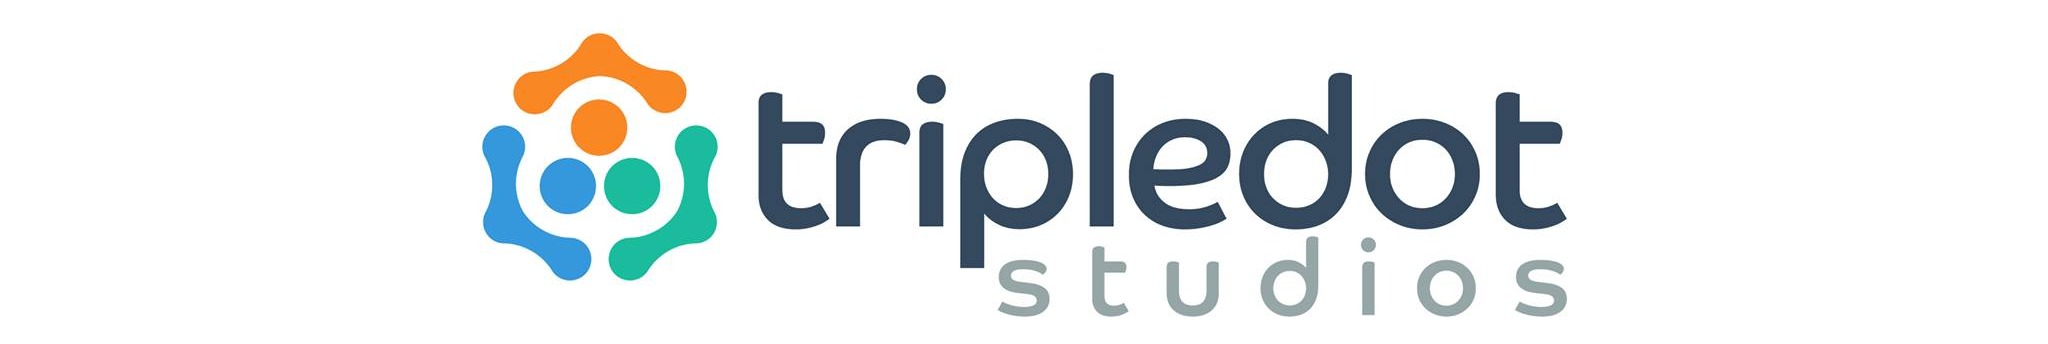 Tripledot Studios background